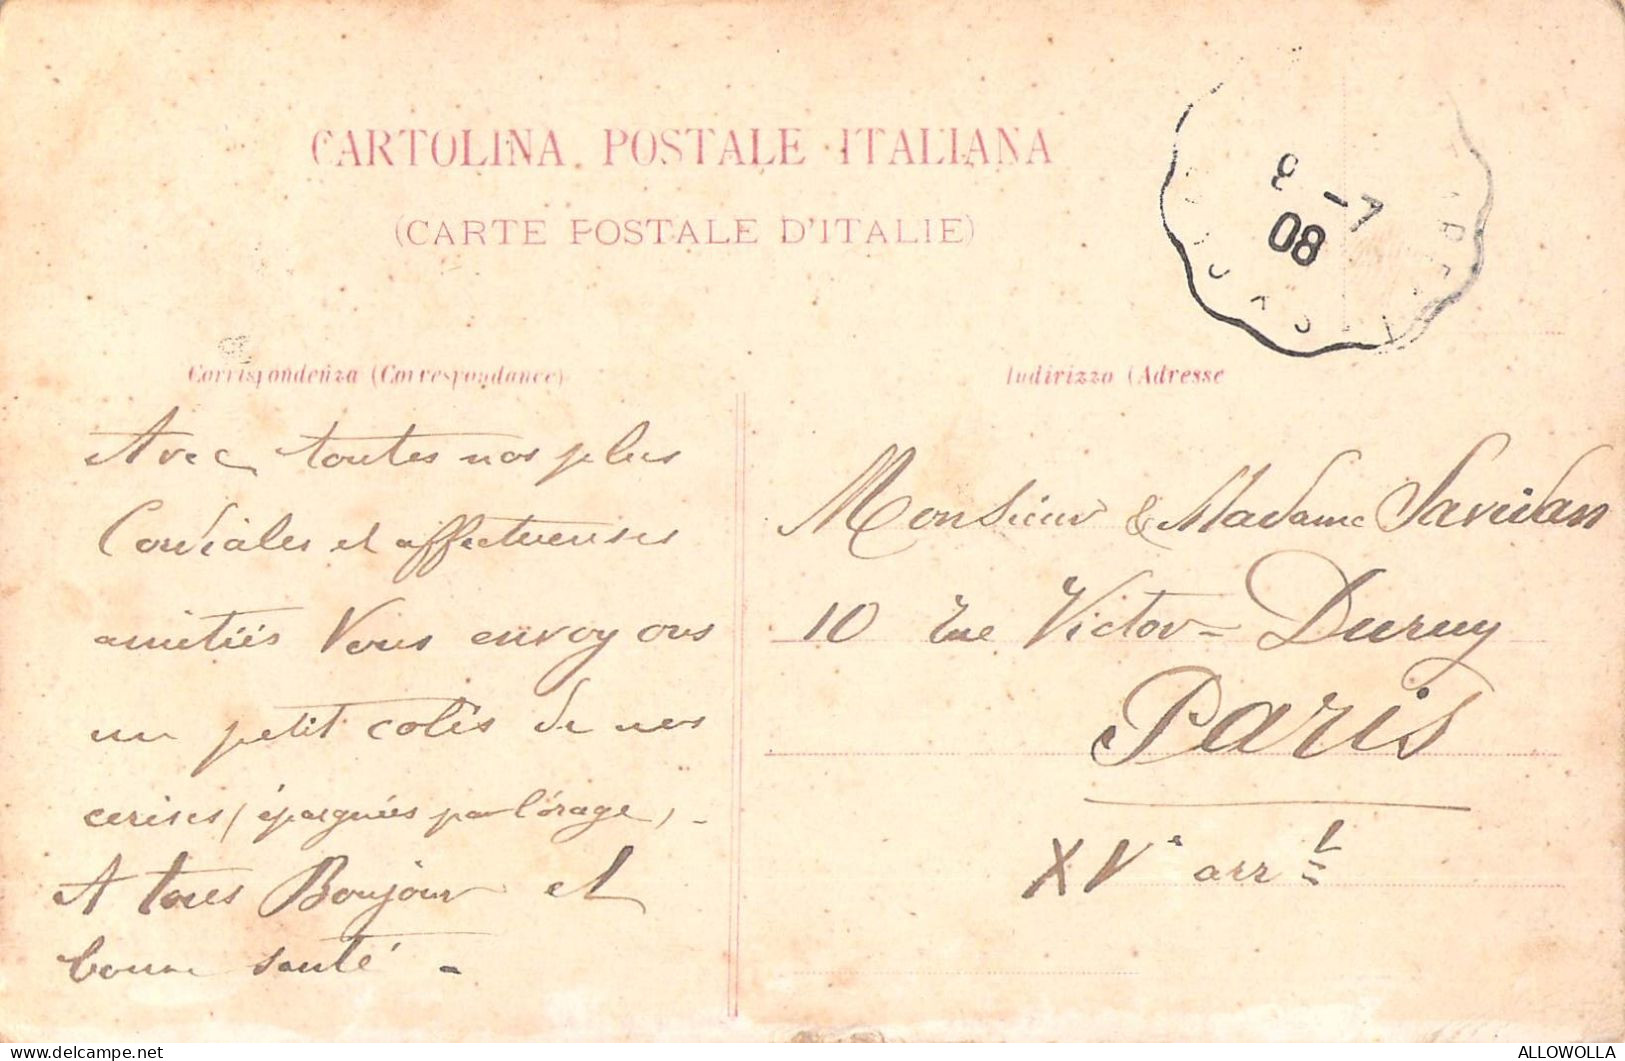 27062 " PADOVA-PIAZZALE UNITA' D'ITALIA " ANIMATA-VERA FOTO-CART. POST.  SPED.1908 - Padova (Padua)